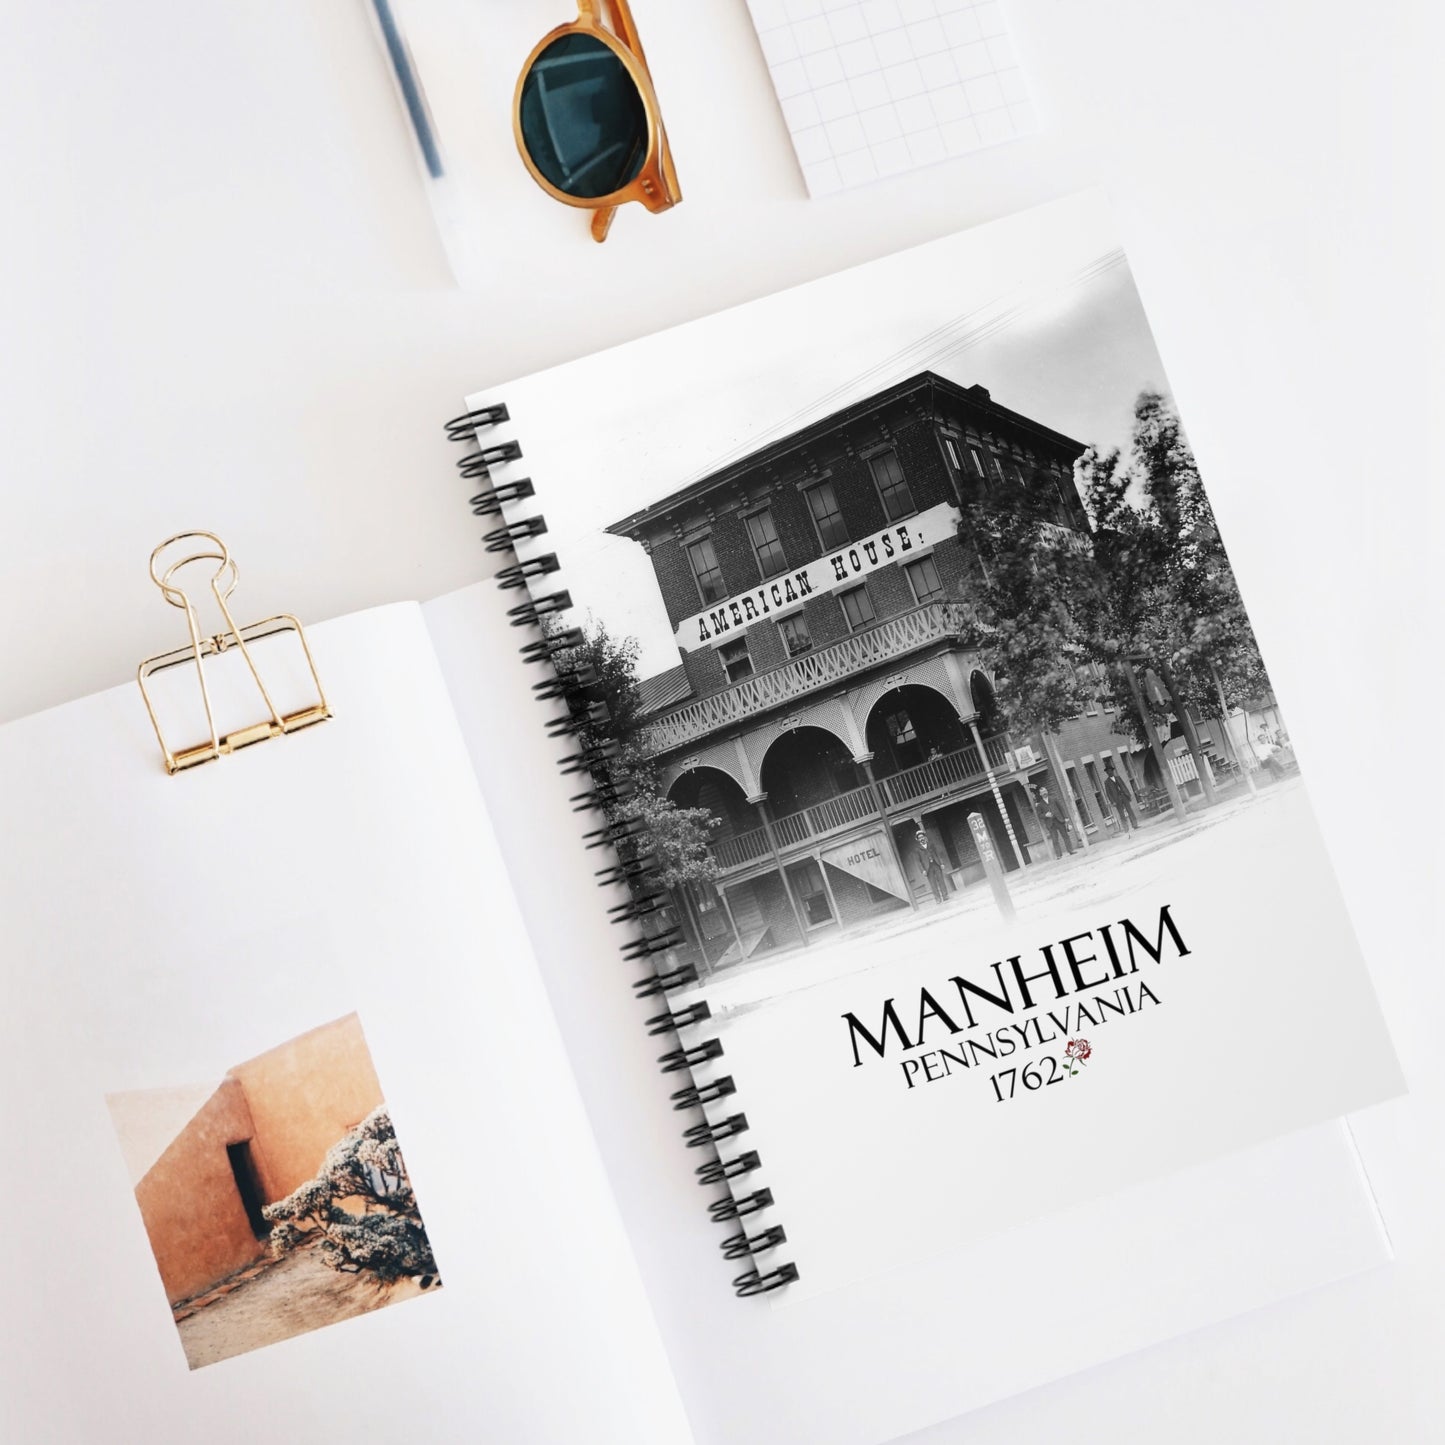 The American House - Manheim Pennsylvania - Spiral Notebook - Ruled Line